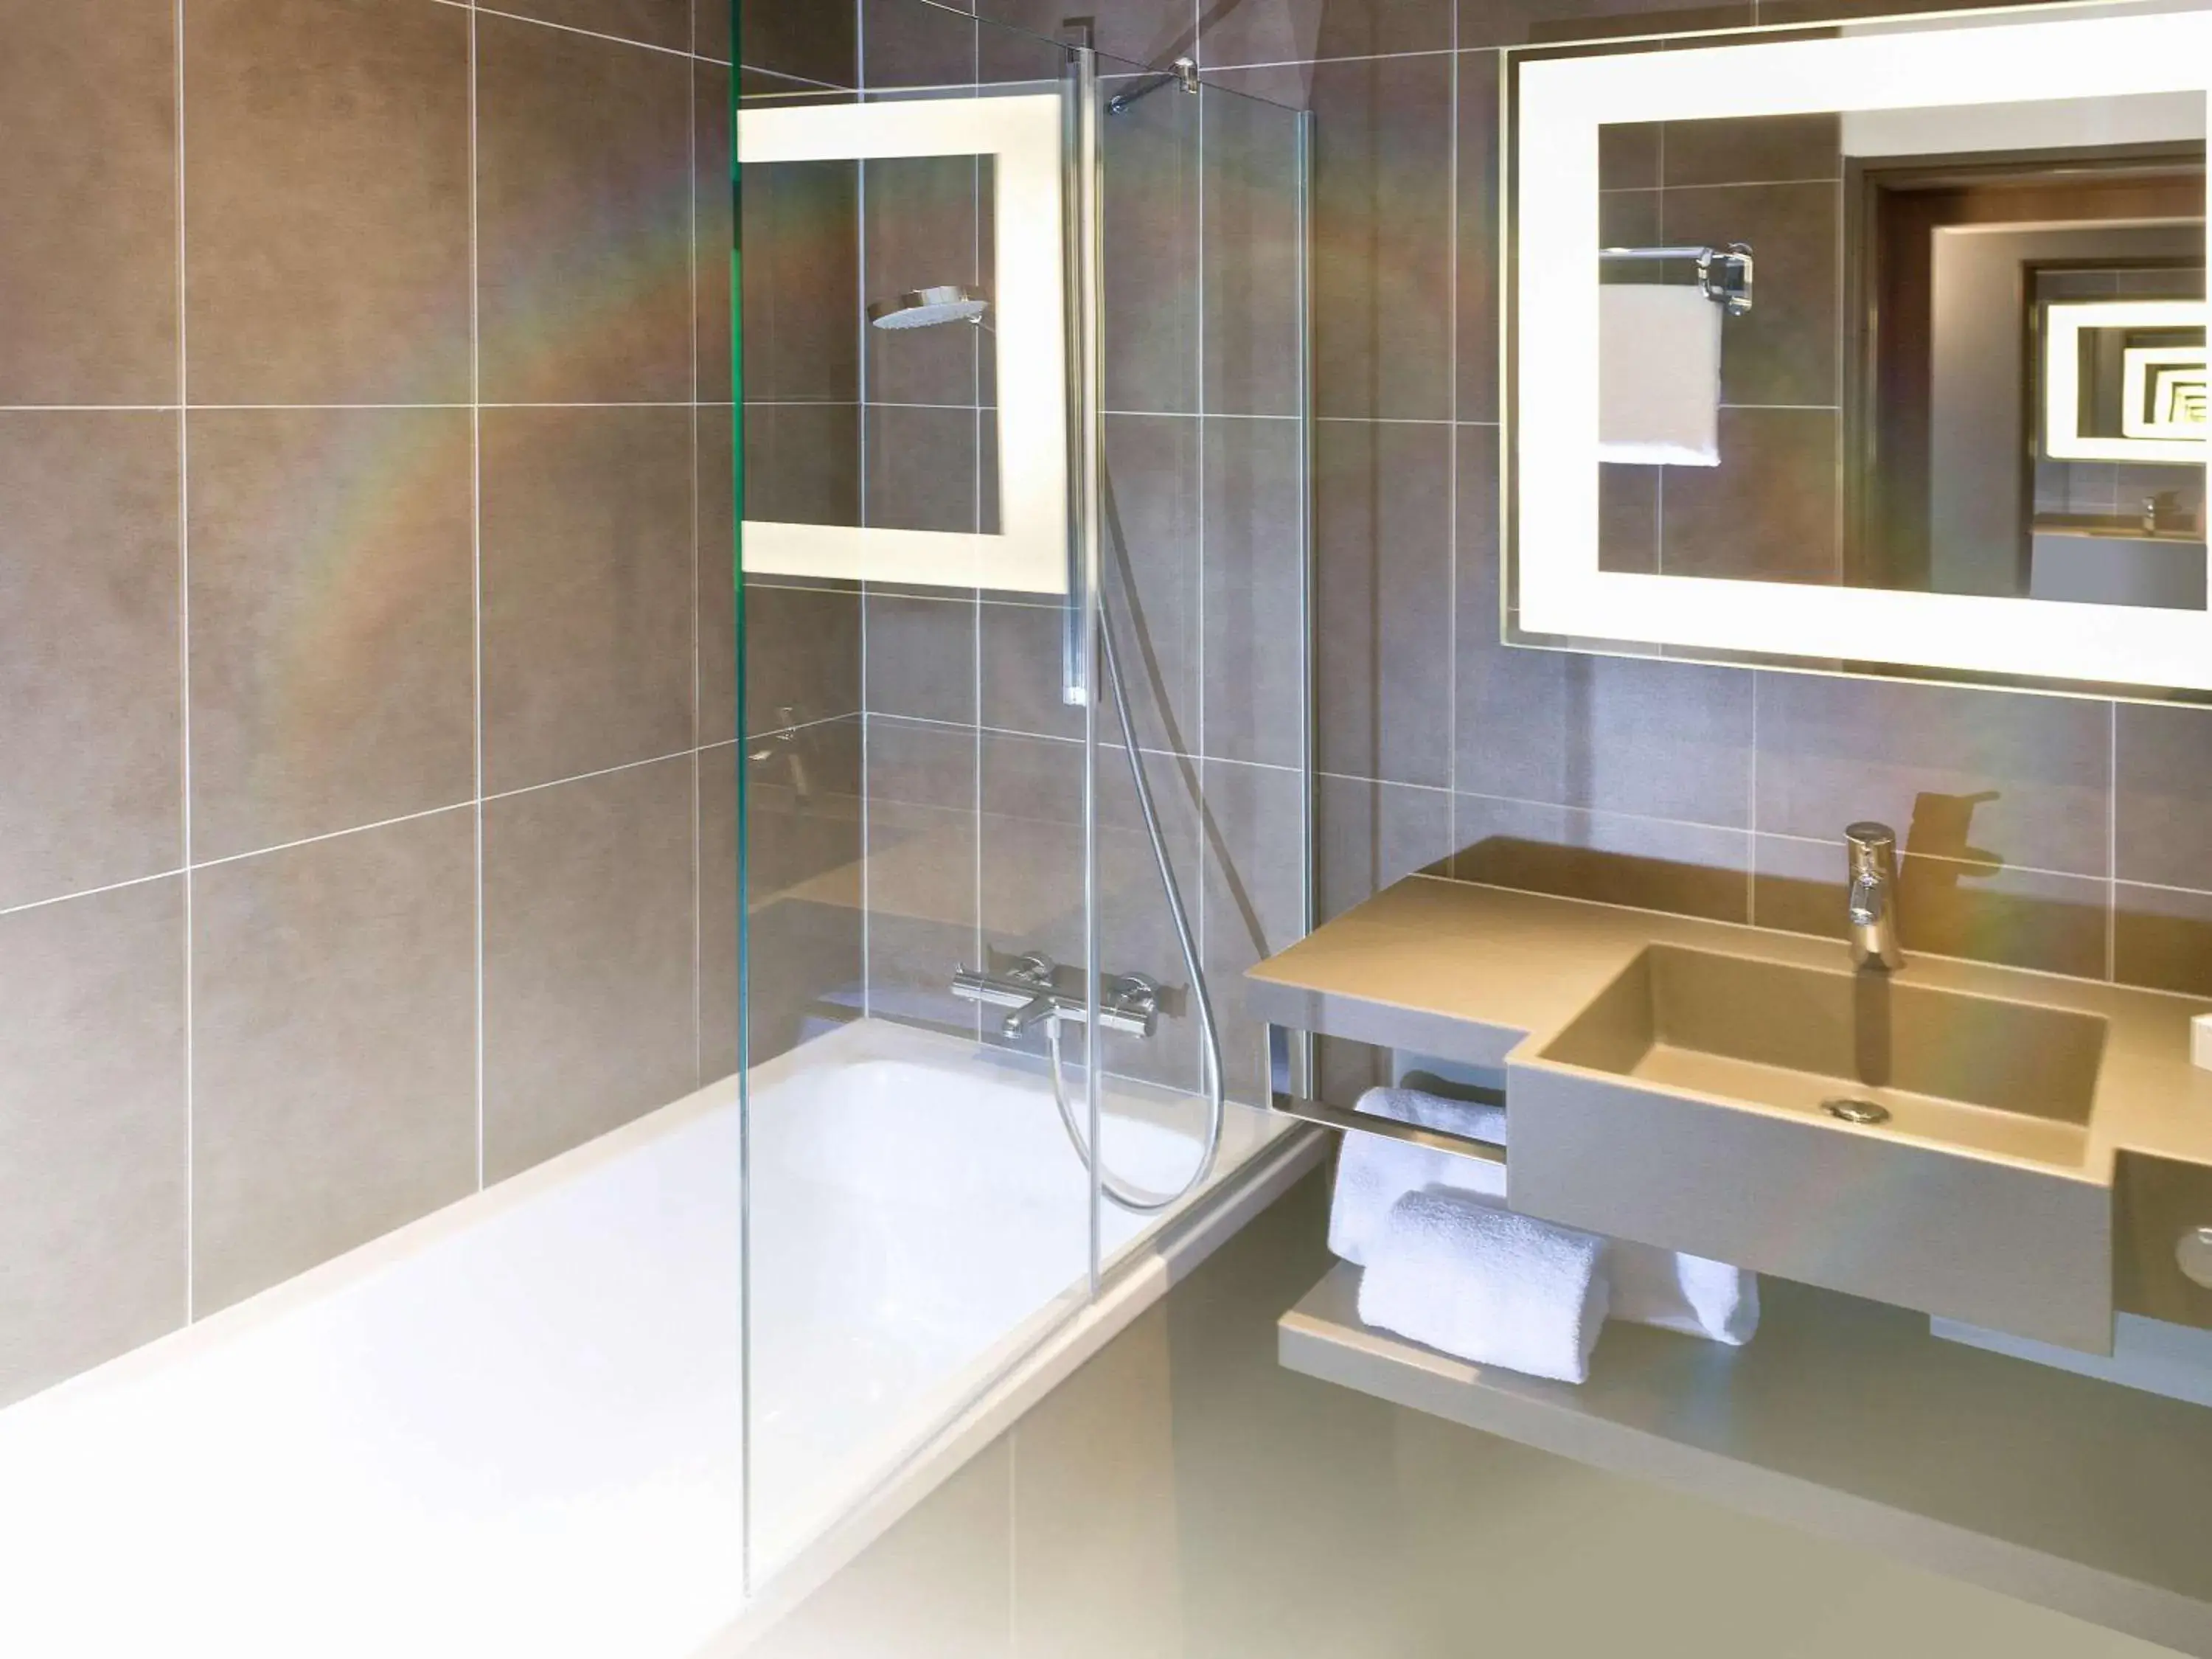 Photo of the whole room, Bathroom in Novotel Massy Palaiseau